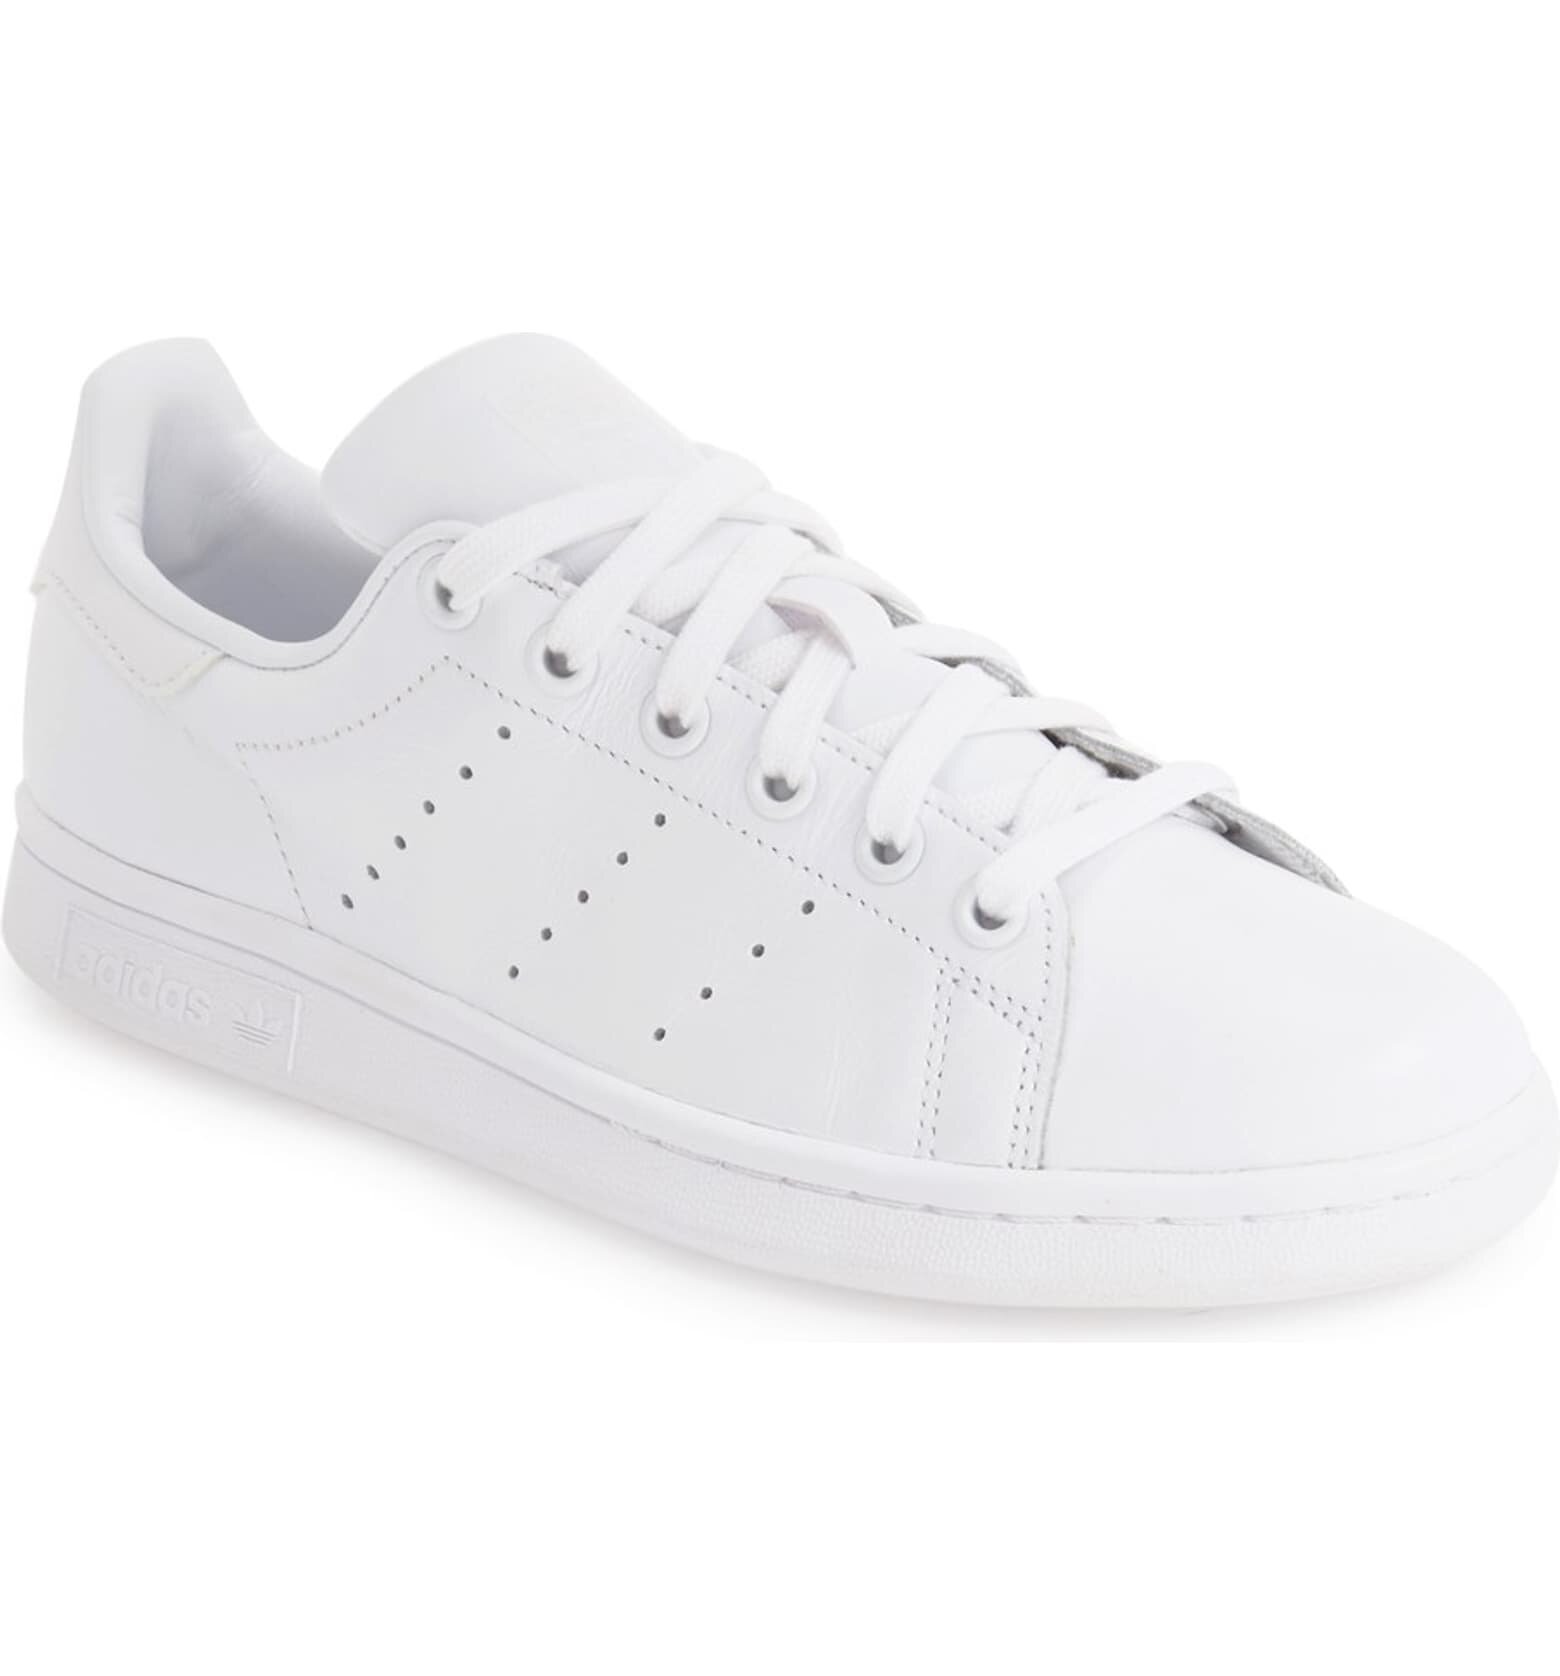 white sneakers.jpeg